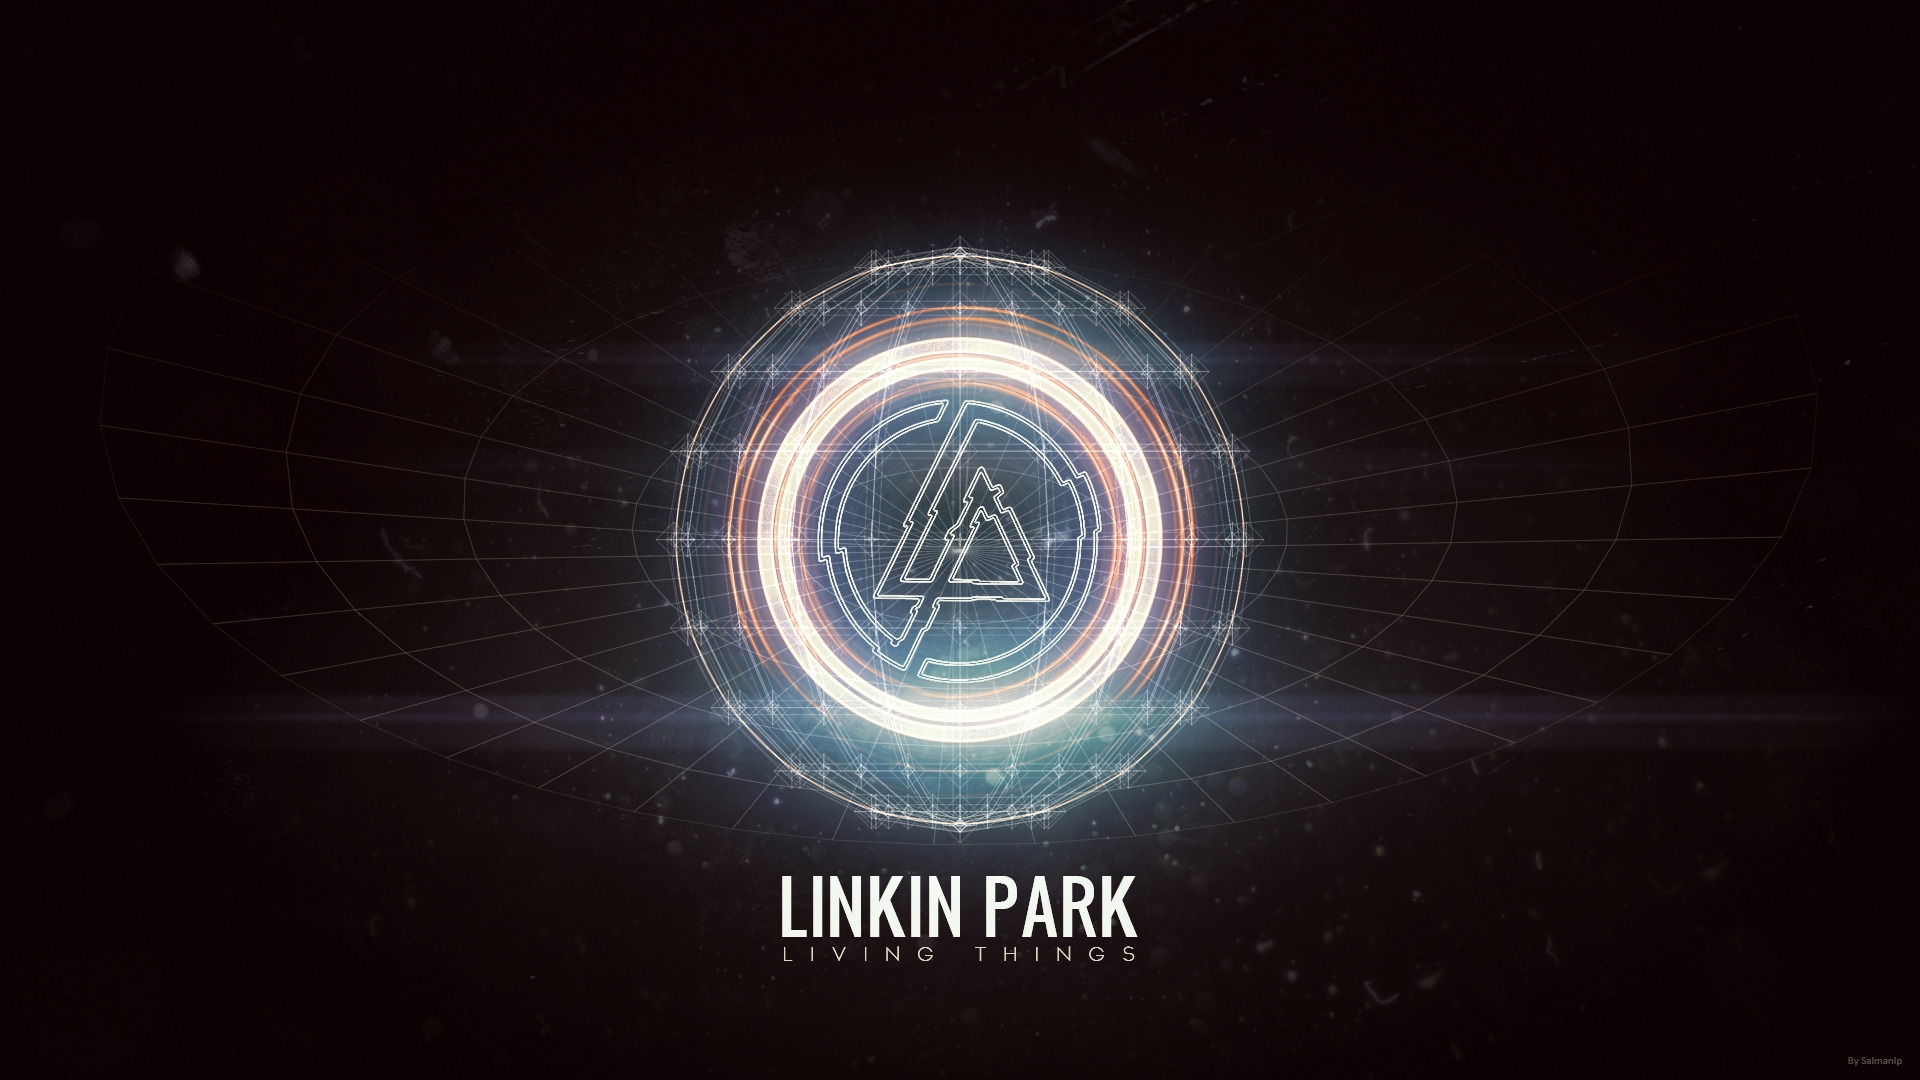 Linkin Park Living Things for 1920 x 1080 HDTV 1080p resolution